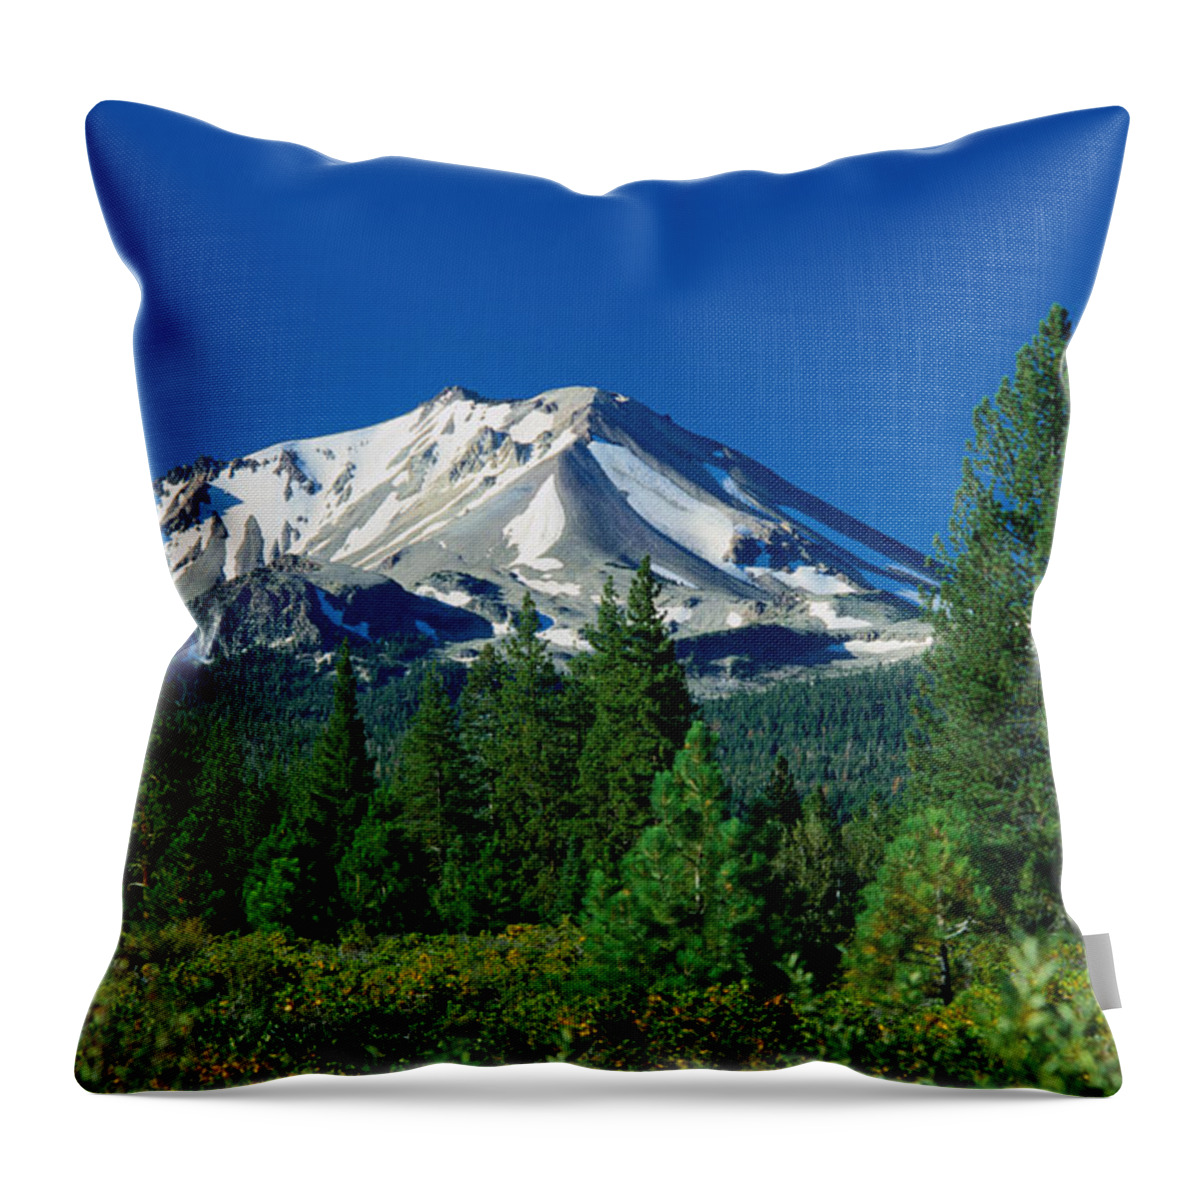 Lassen Volcanic National Park Throw Pillow featuring the photograph Mt Lassen From The North - Lassen by John Elk